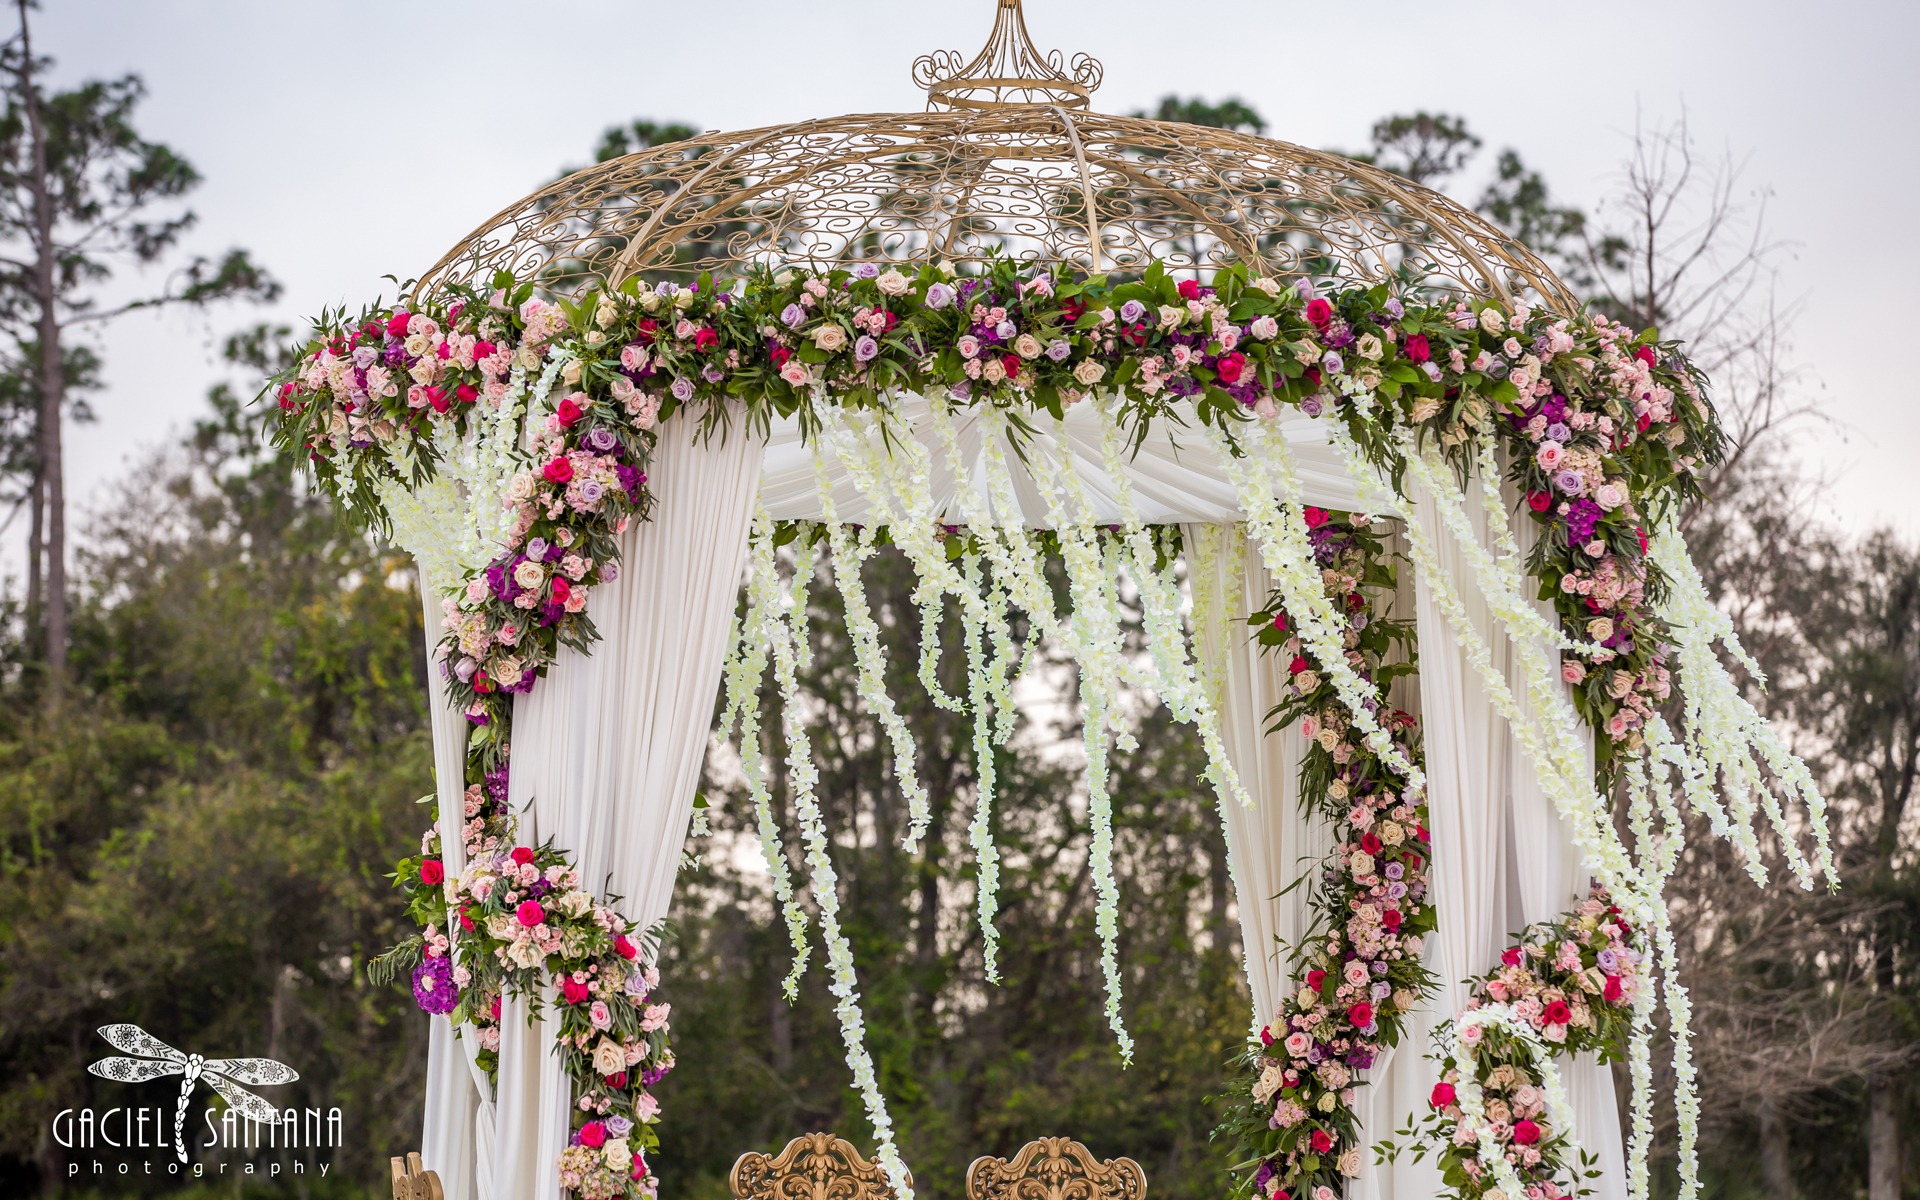 Fantasy Ceremony Boho Chic 1 South Asian Indian Wedding Decor Design Suhaag Garden Florida